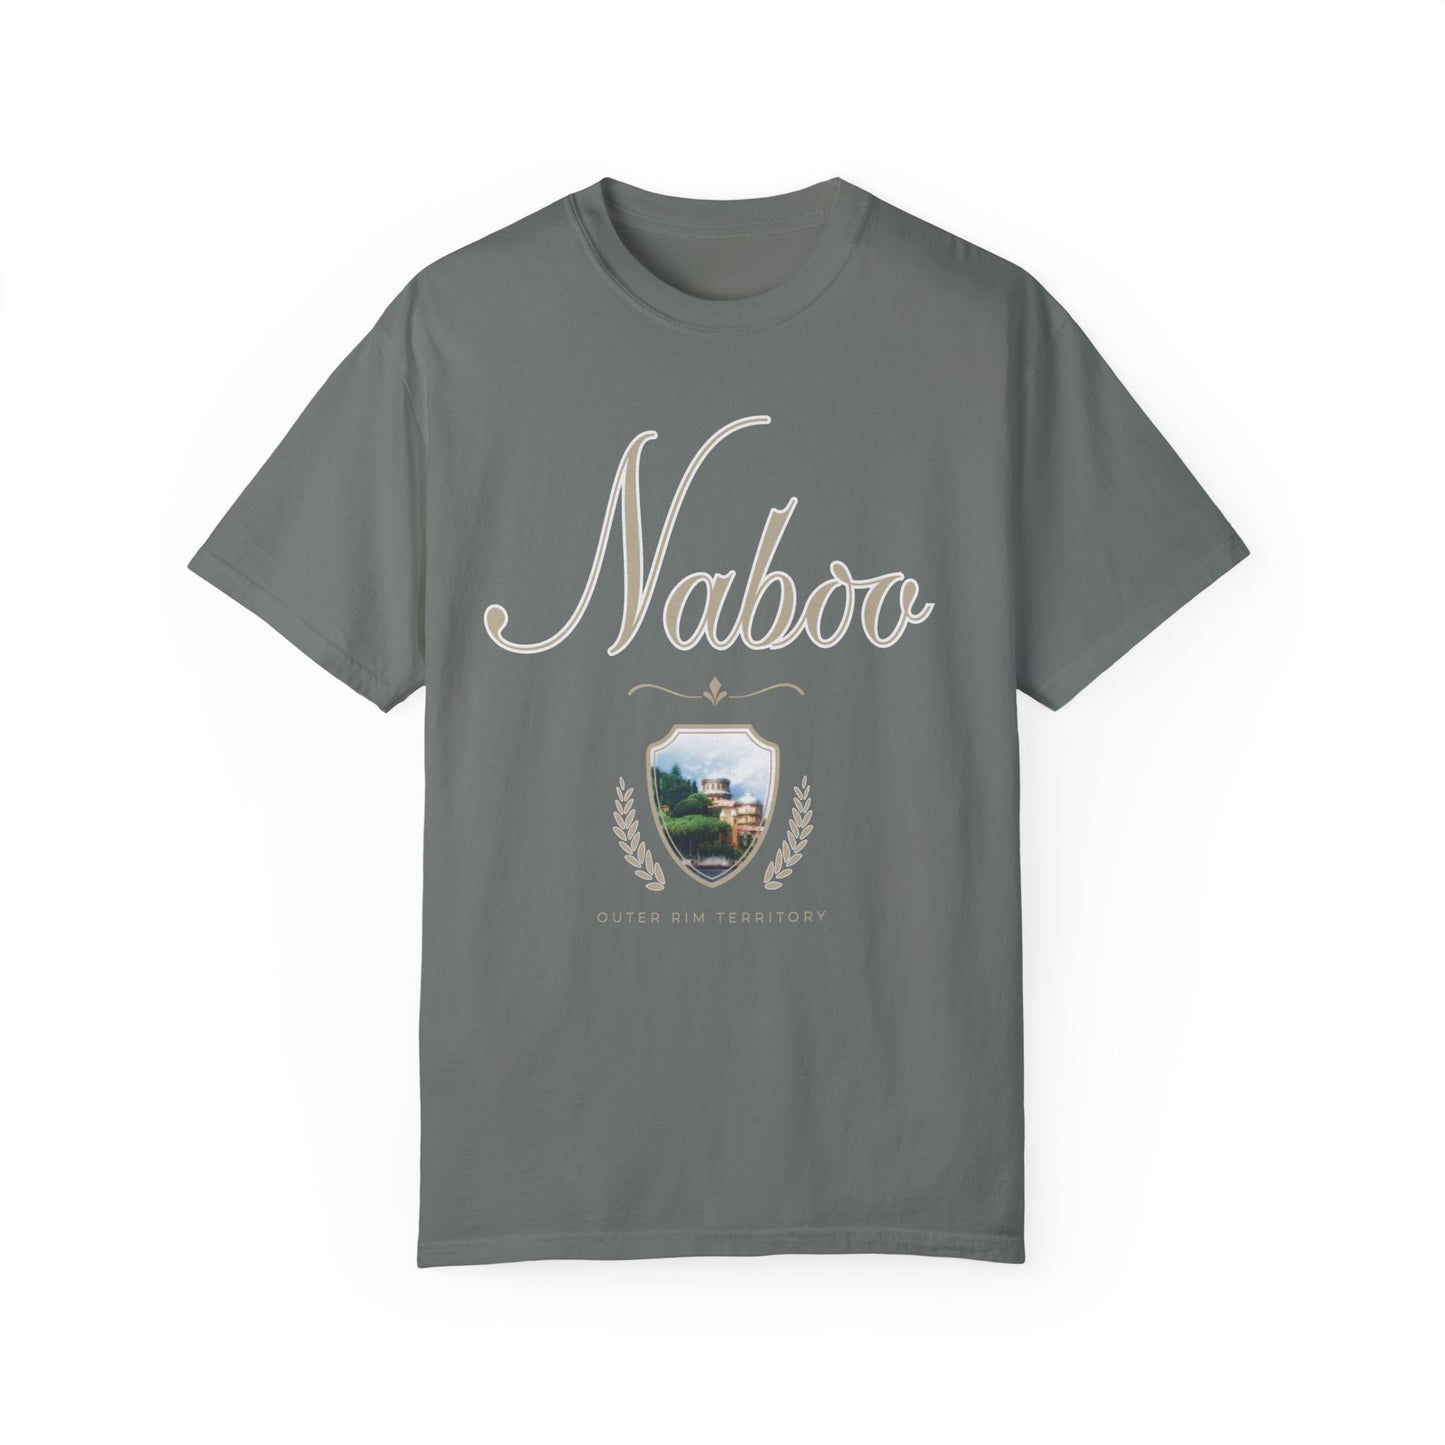 Naboo Vintage Destination Graphic Tee